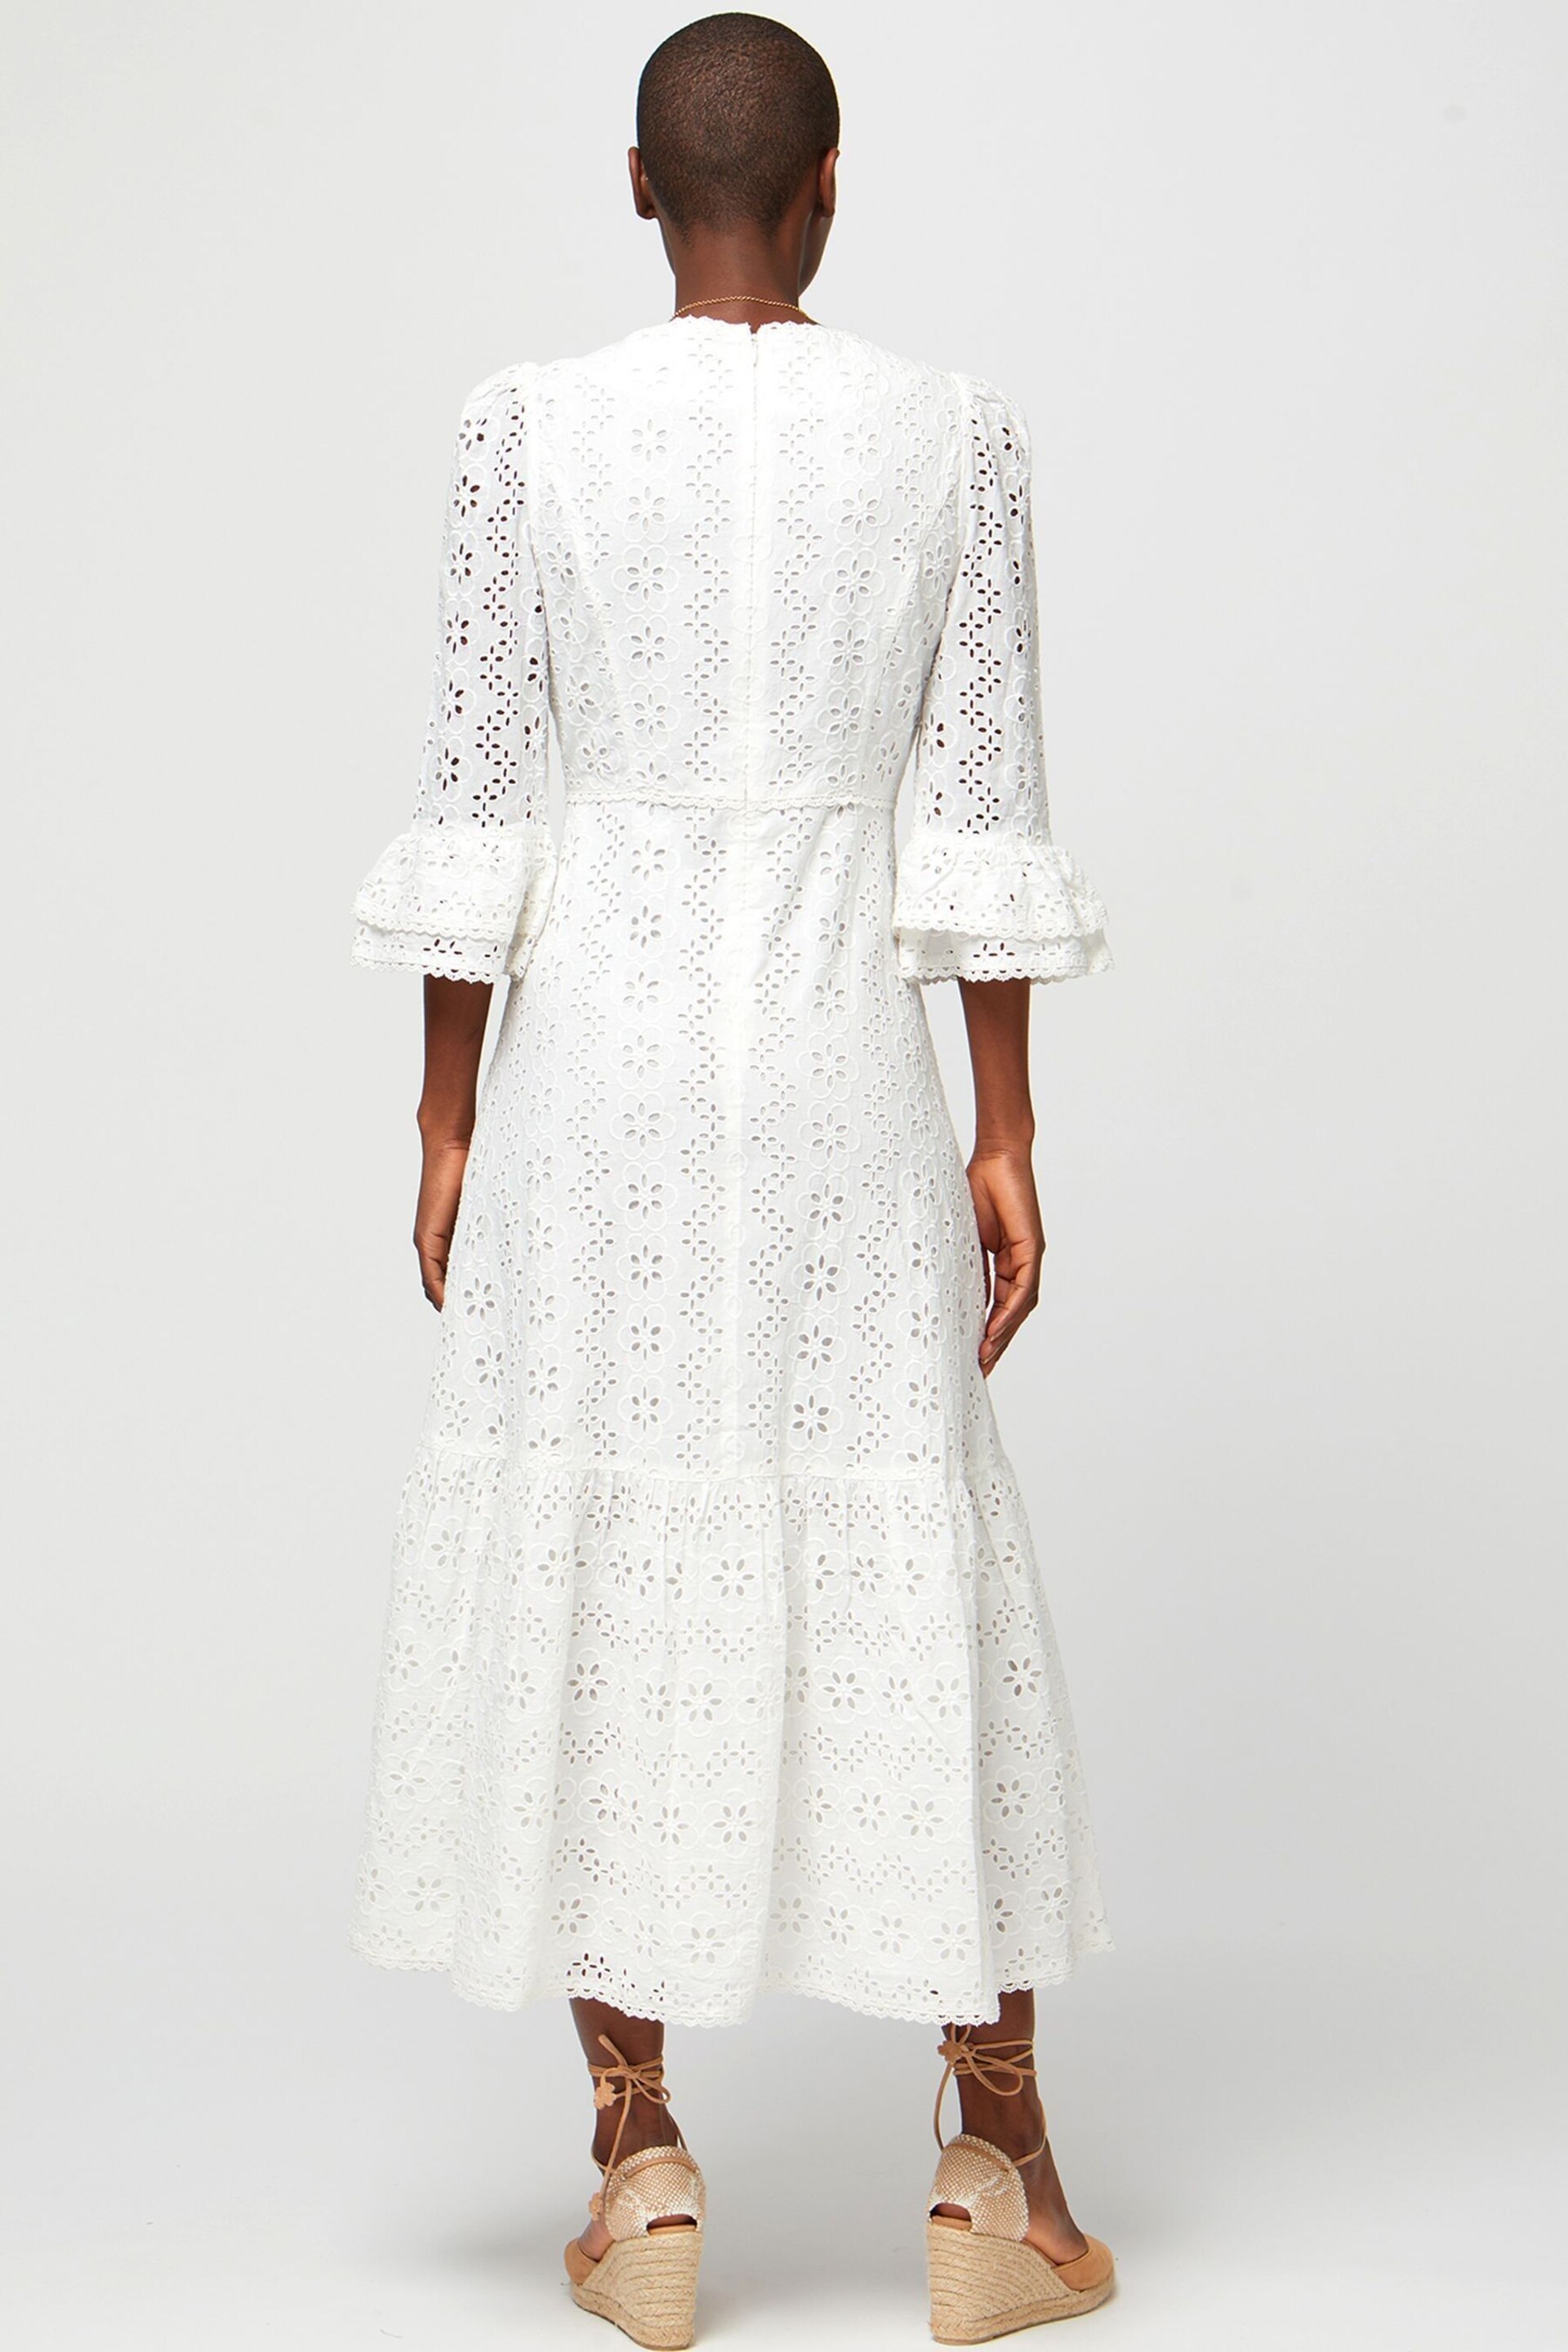 Aspiga Victoria Broderie White Dress - Image 6 of 8